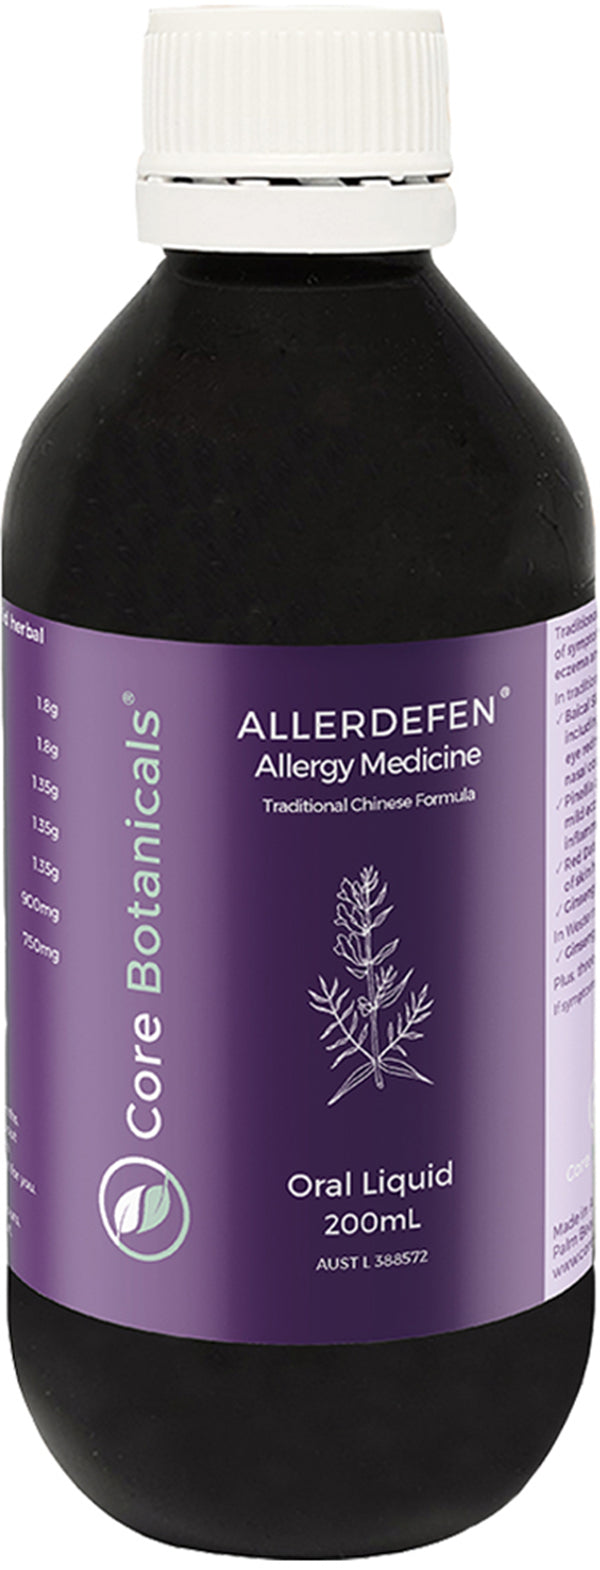 Core Botanicals Allerdefen Allergy Medicine 200ml